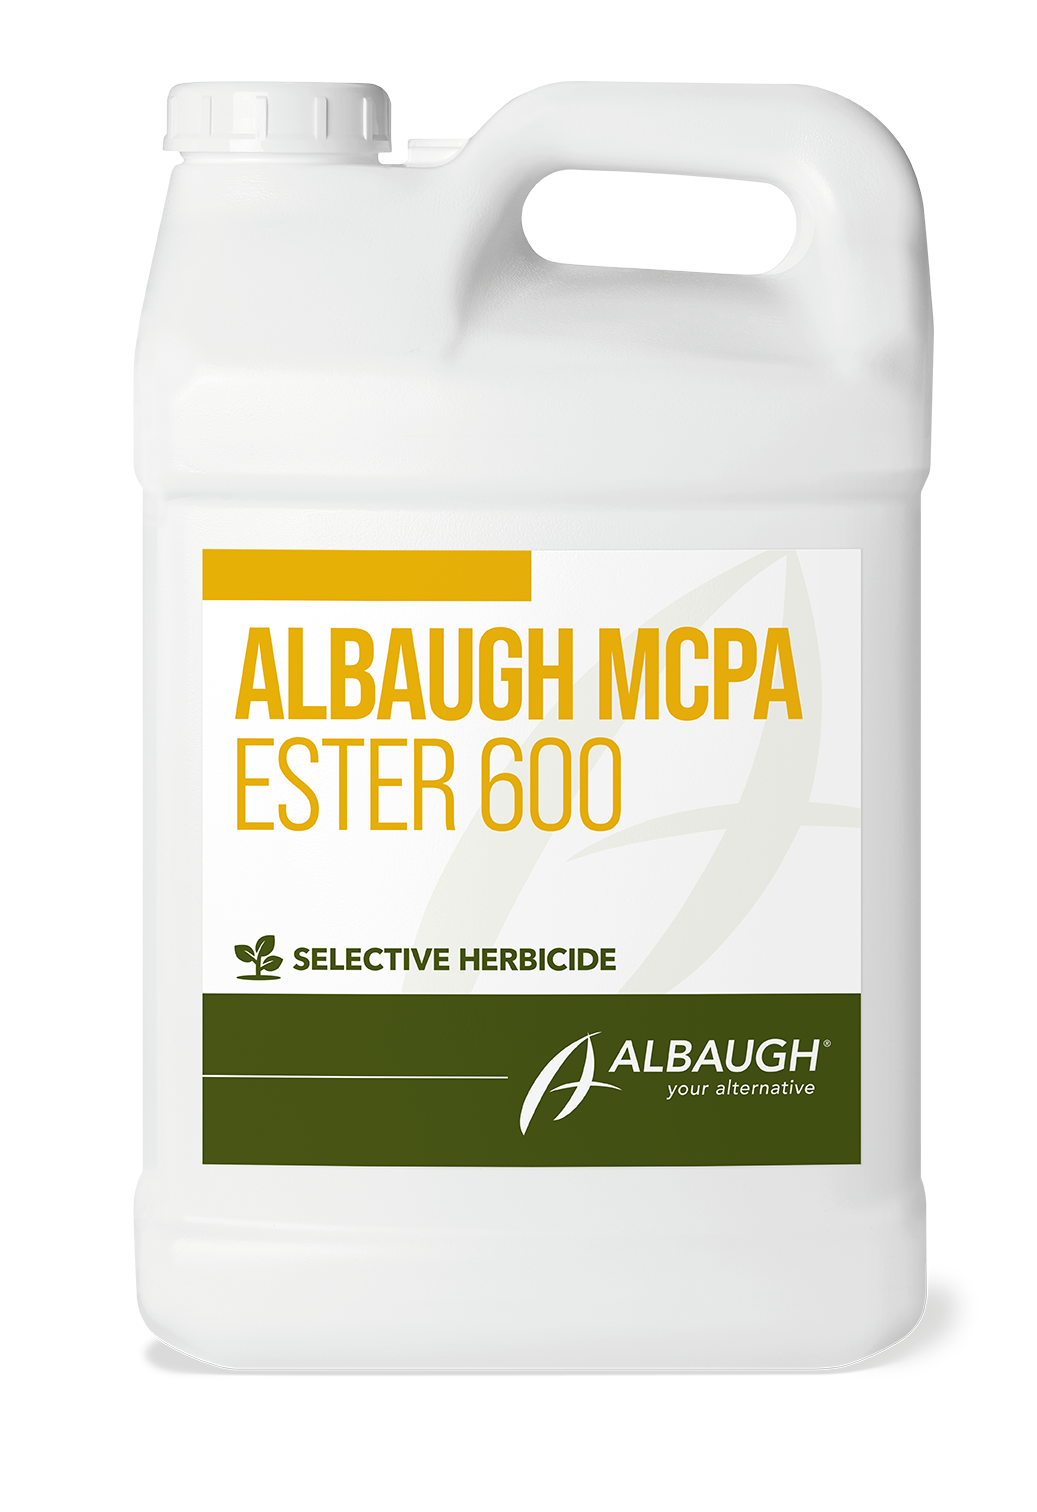 Albaugh MCPA Ester 600